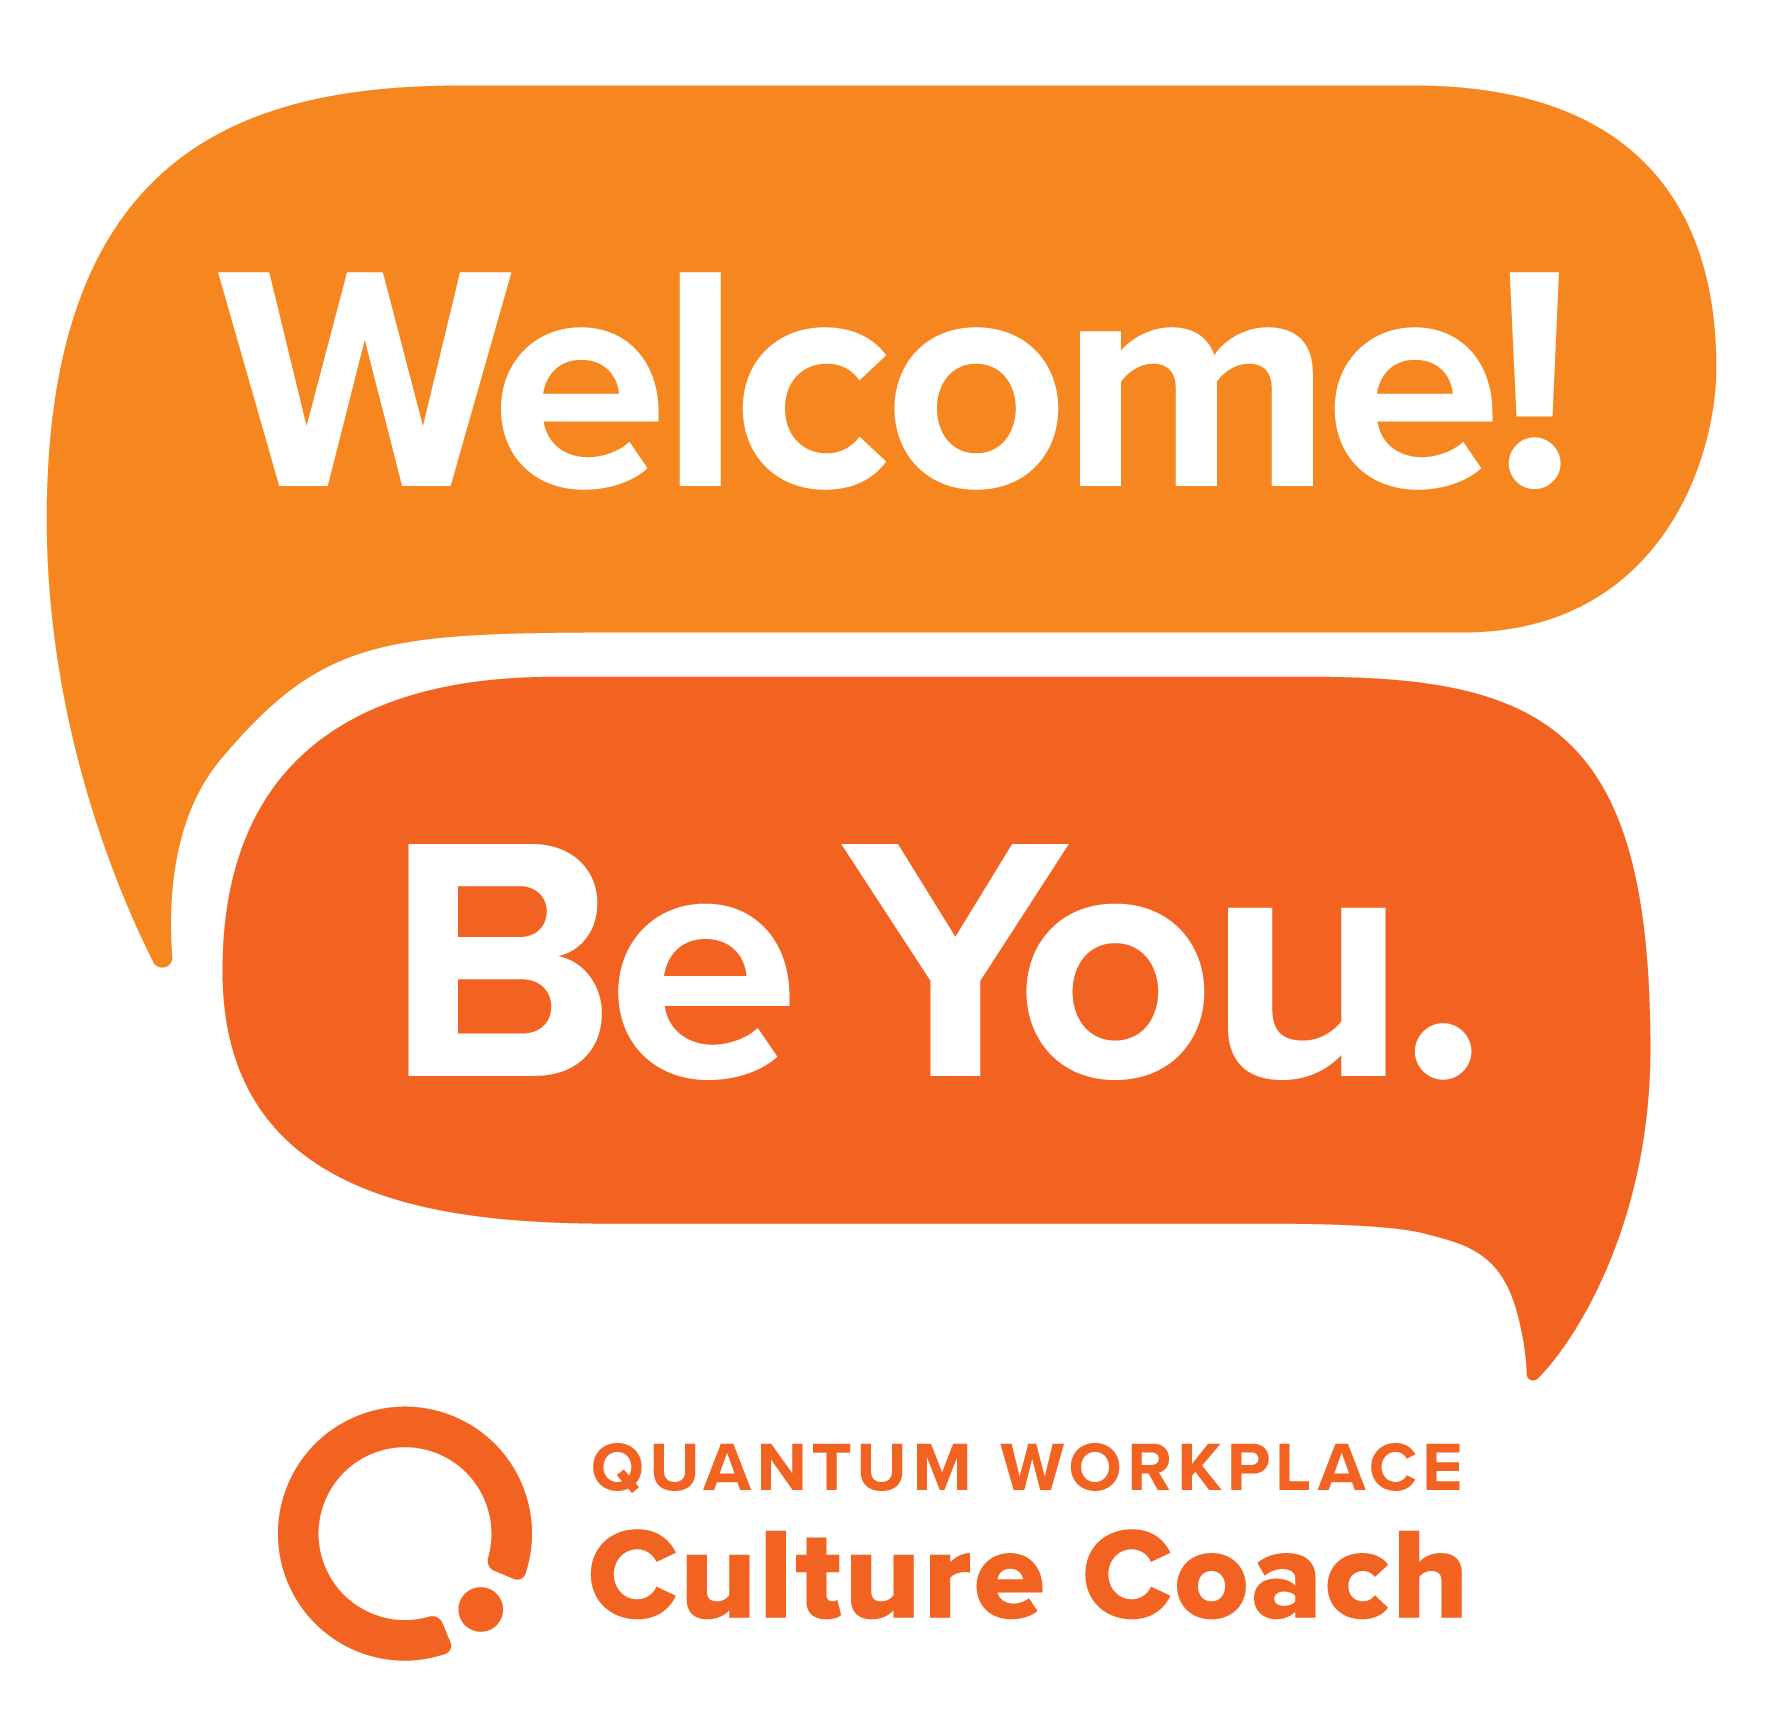 Culture Coach program logo